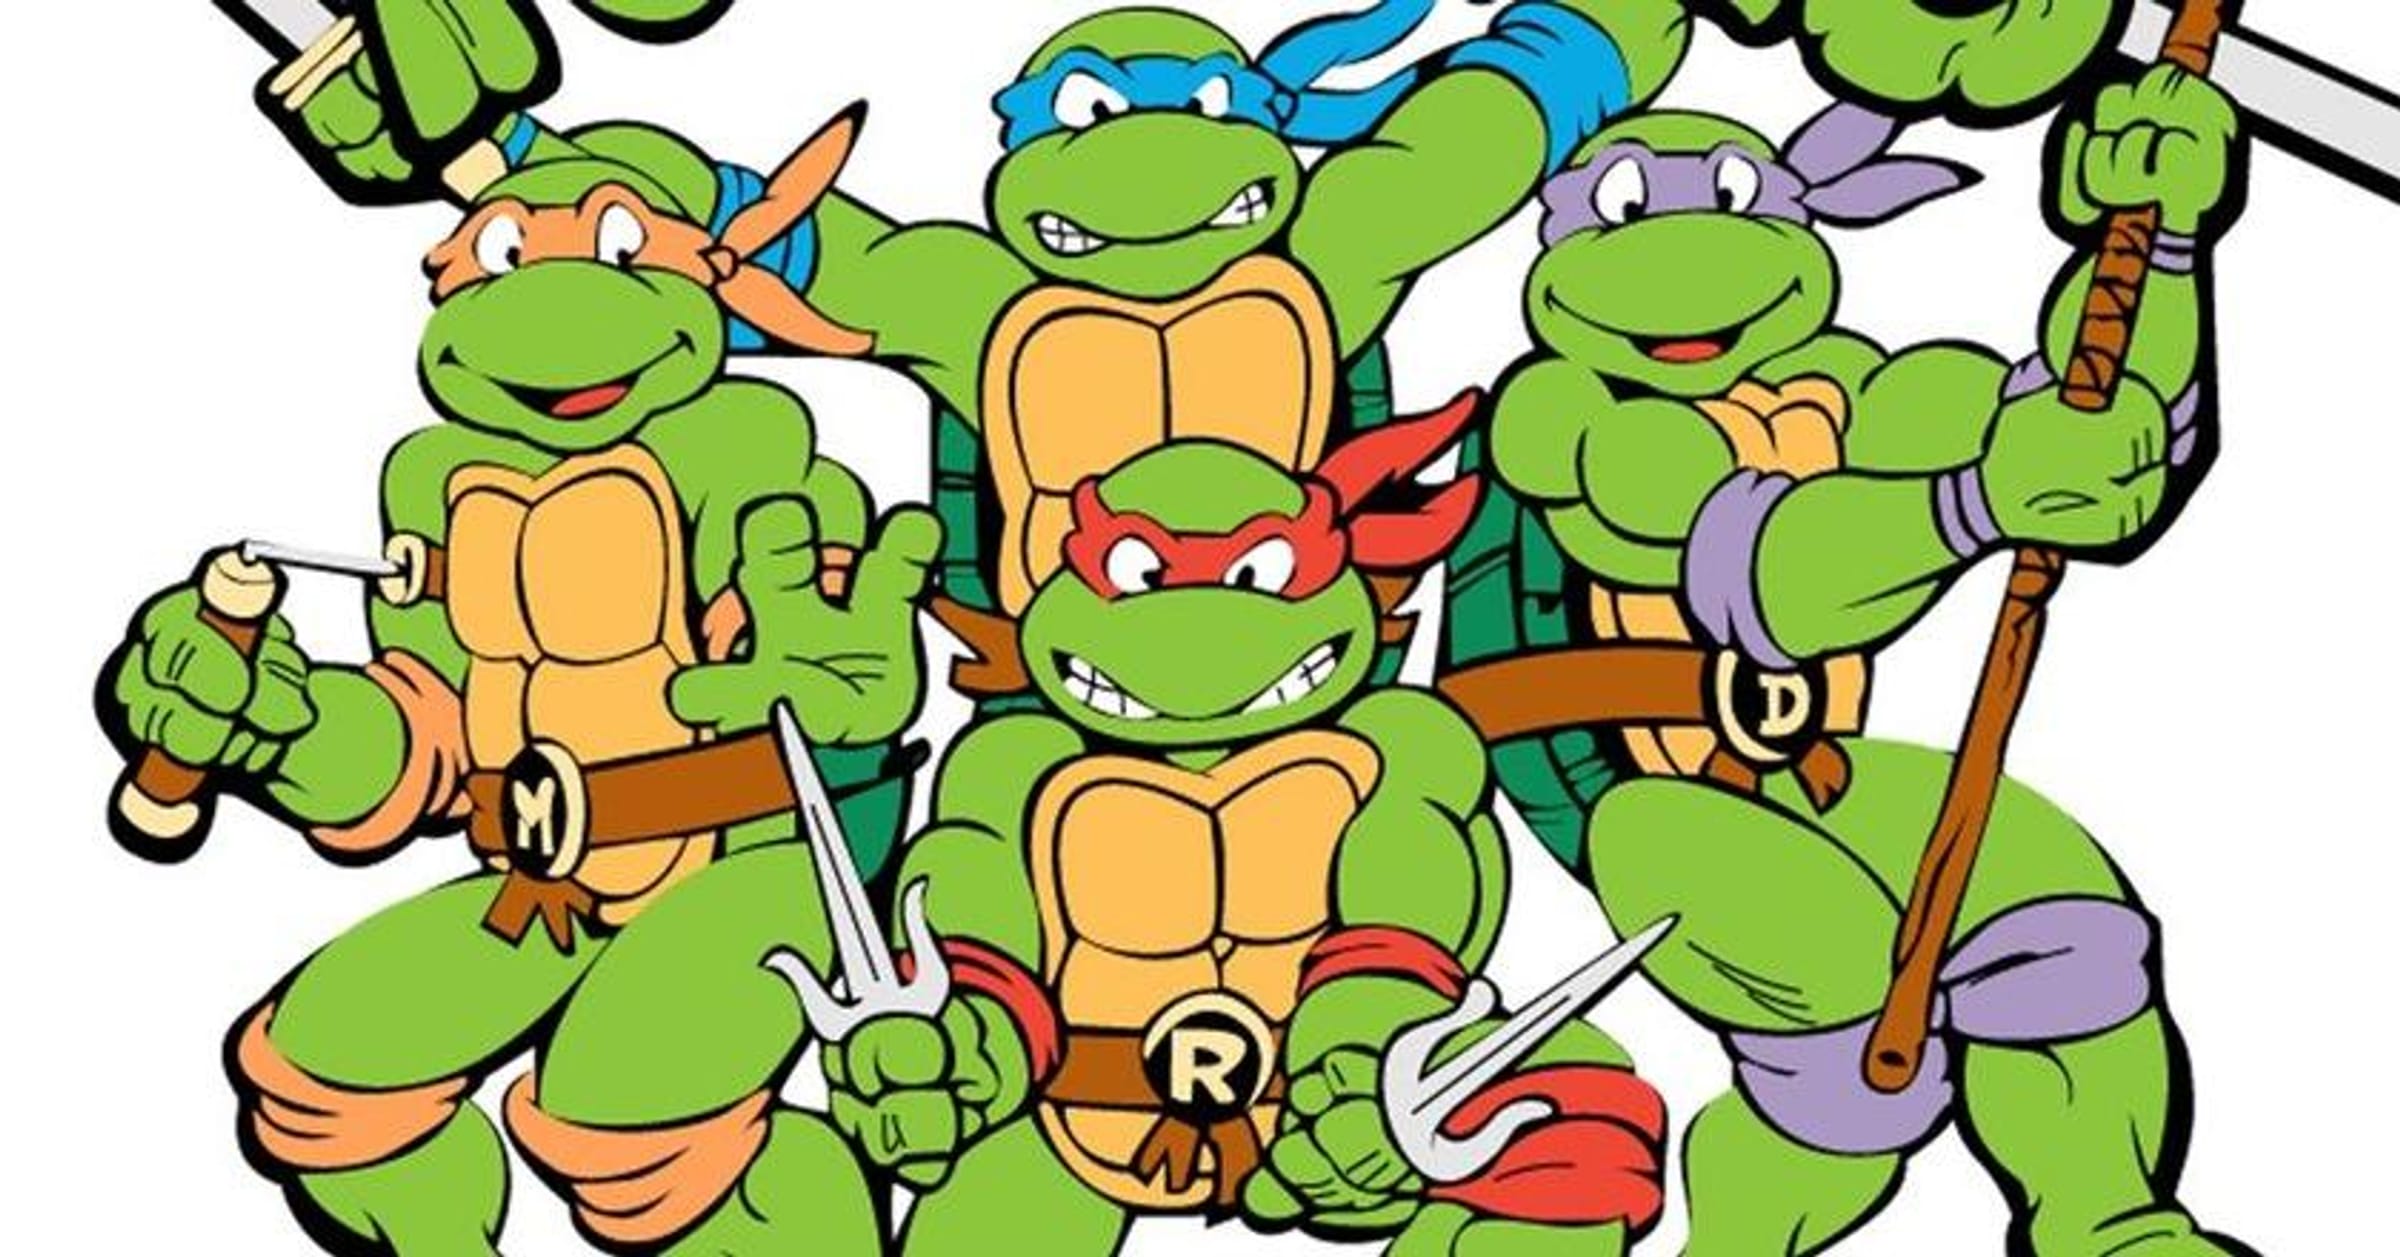 https://imgix.ranker.com/list_img_v2/14177/2394177/original/best-teenage-mutant-ninja-turtles-characters?fit=crop&fm=pjpg&q=80&dpr=2&w=1200&h=720